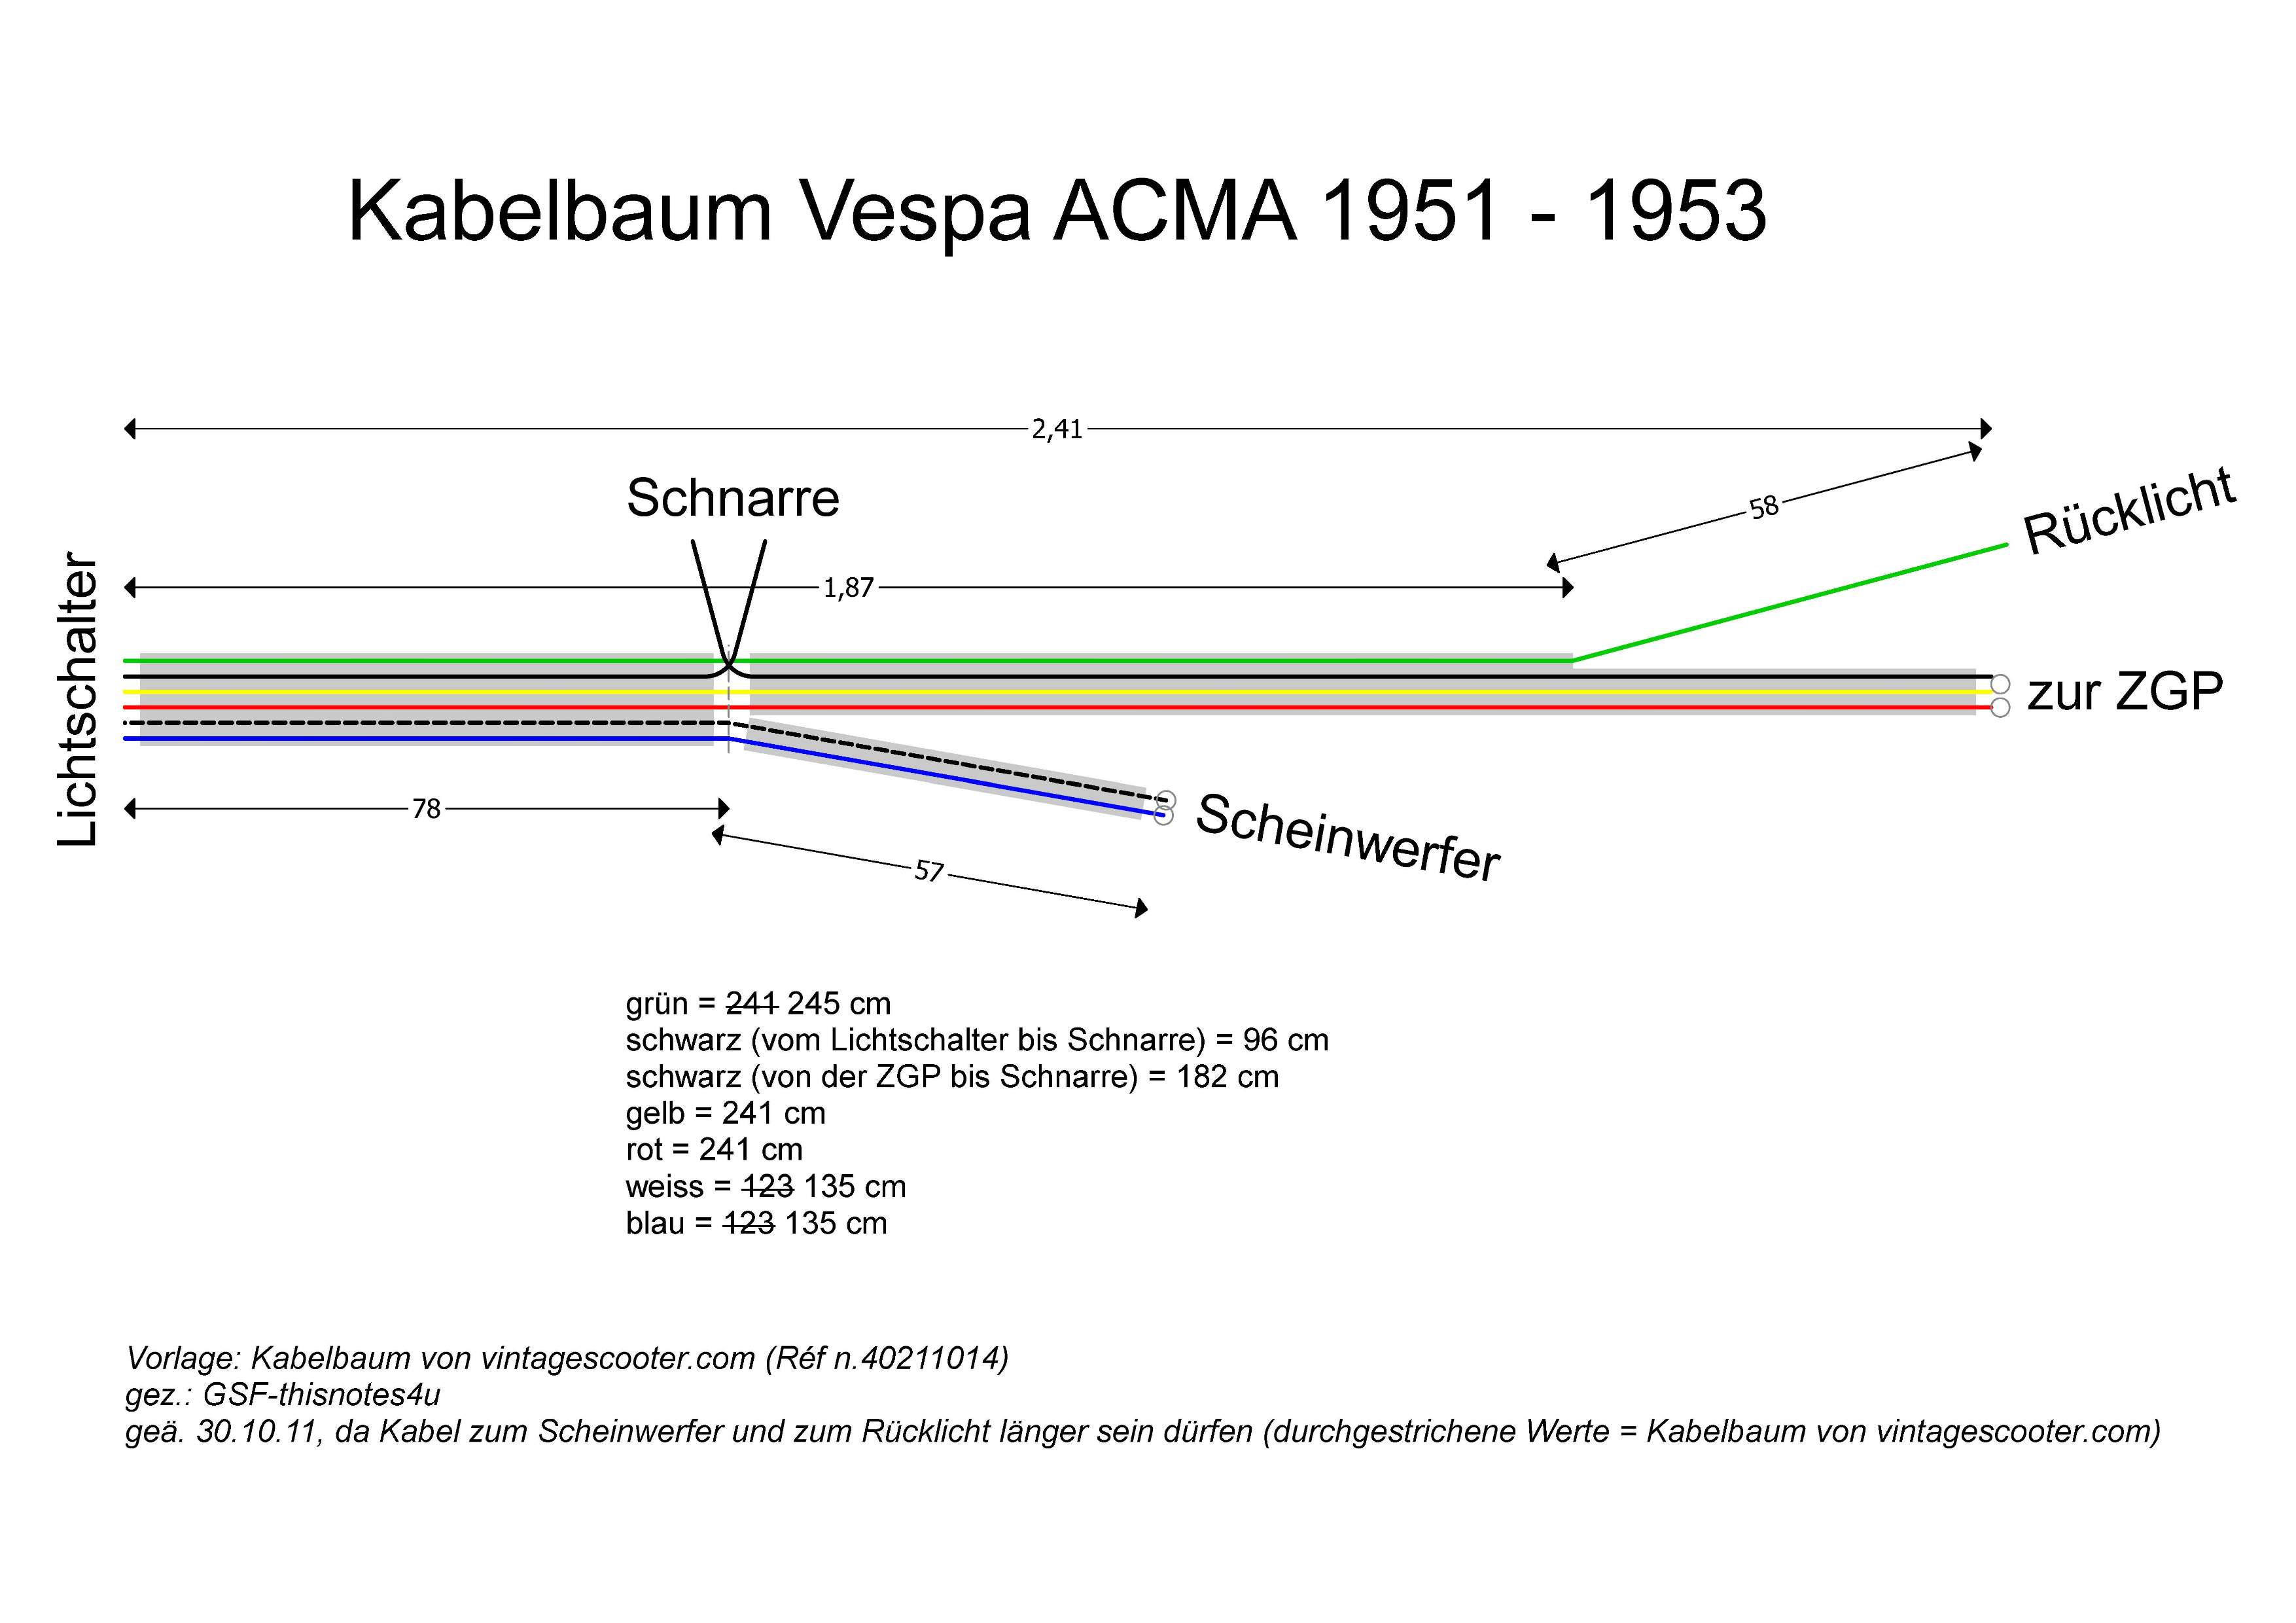 Kabelbaum acma 1951-53 geae.jpg